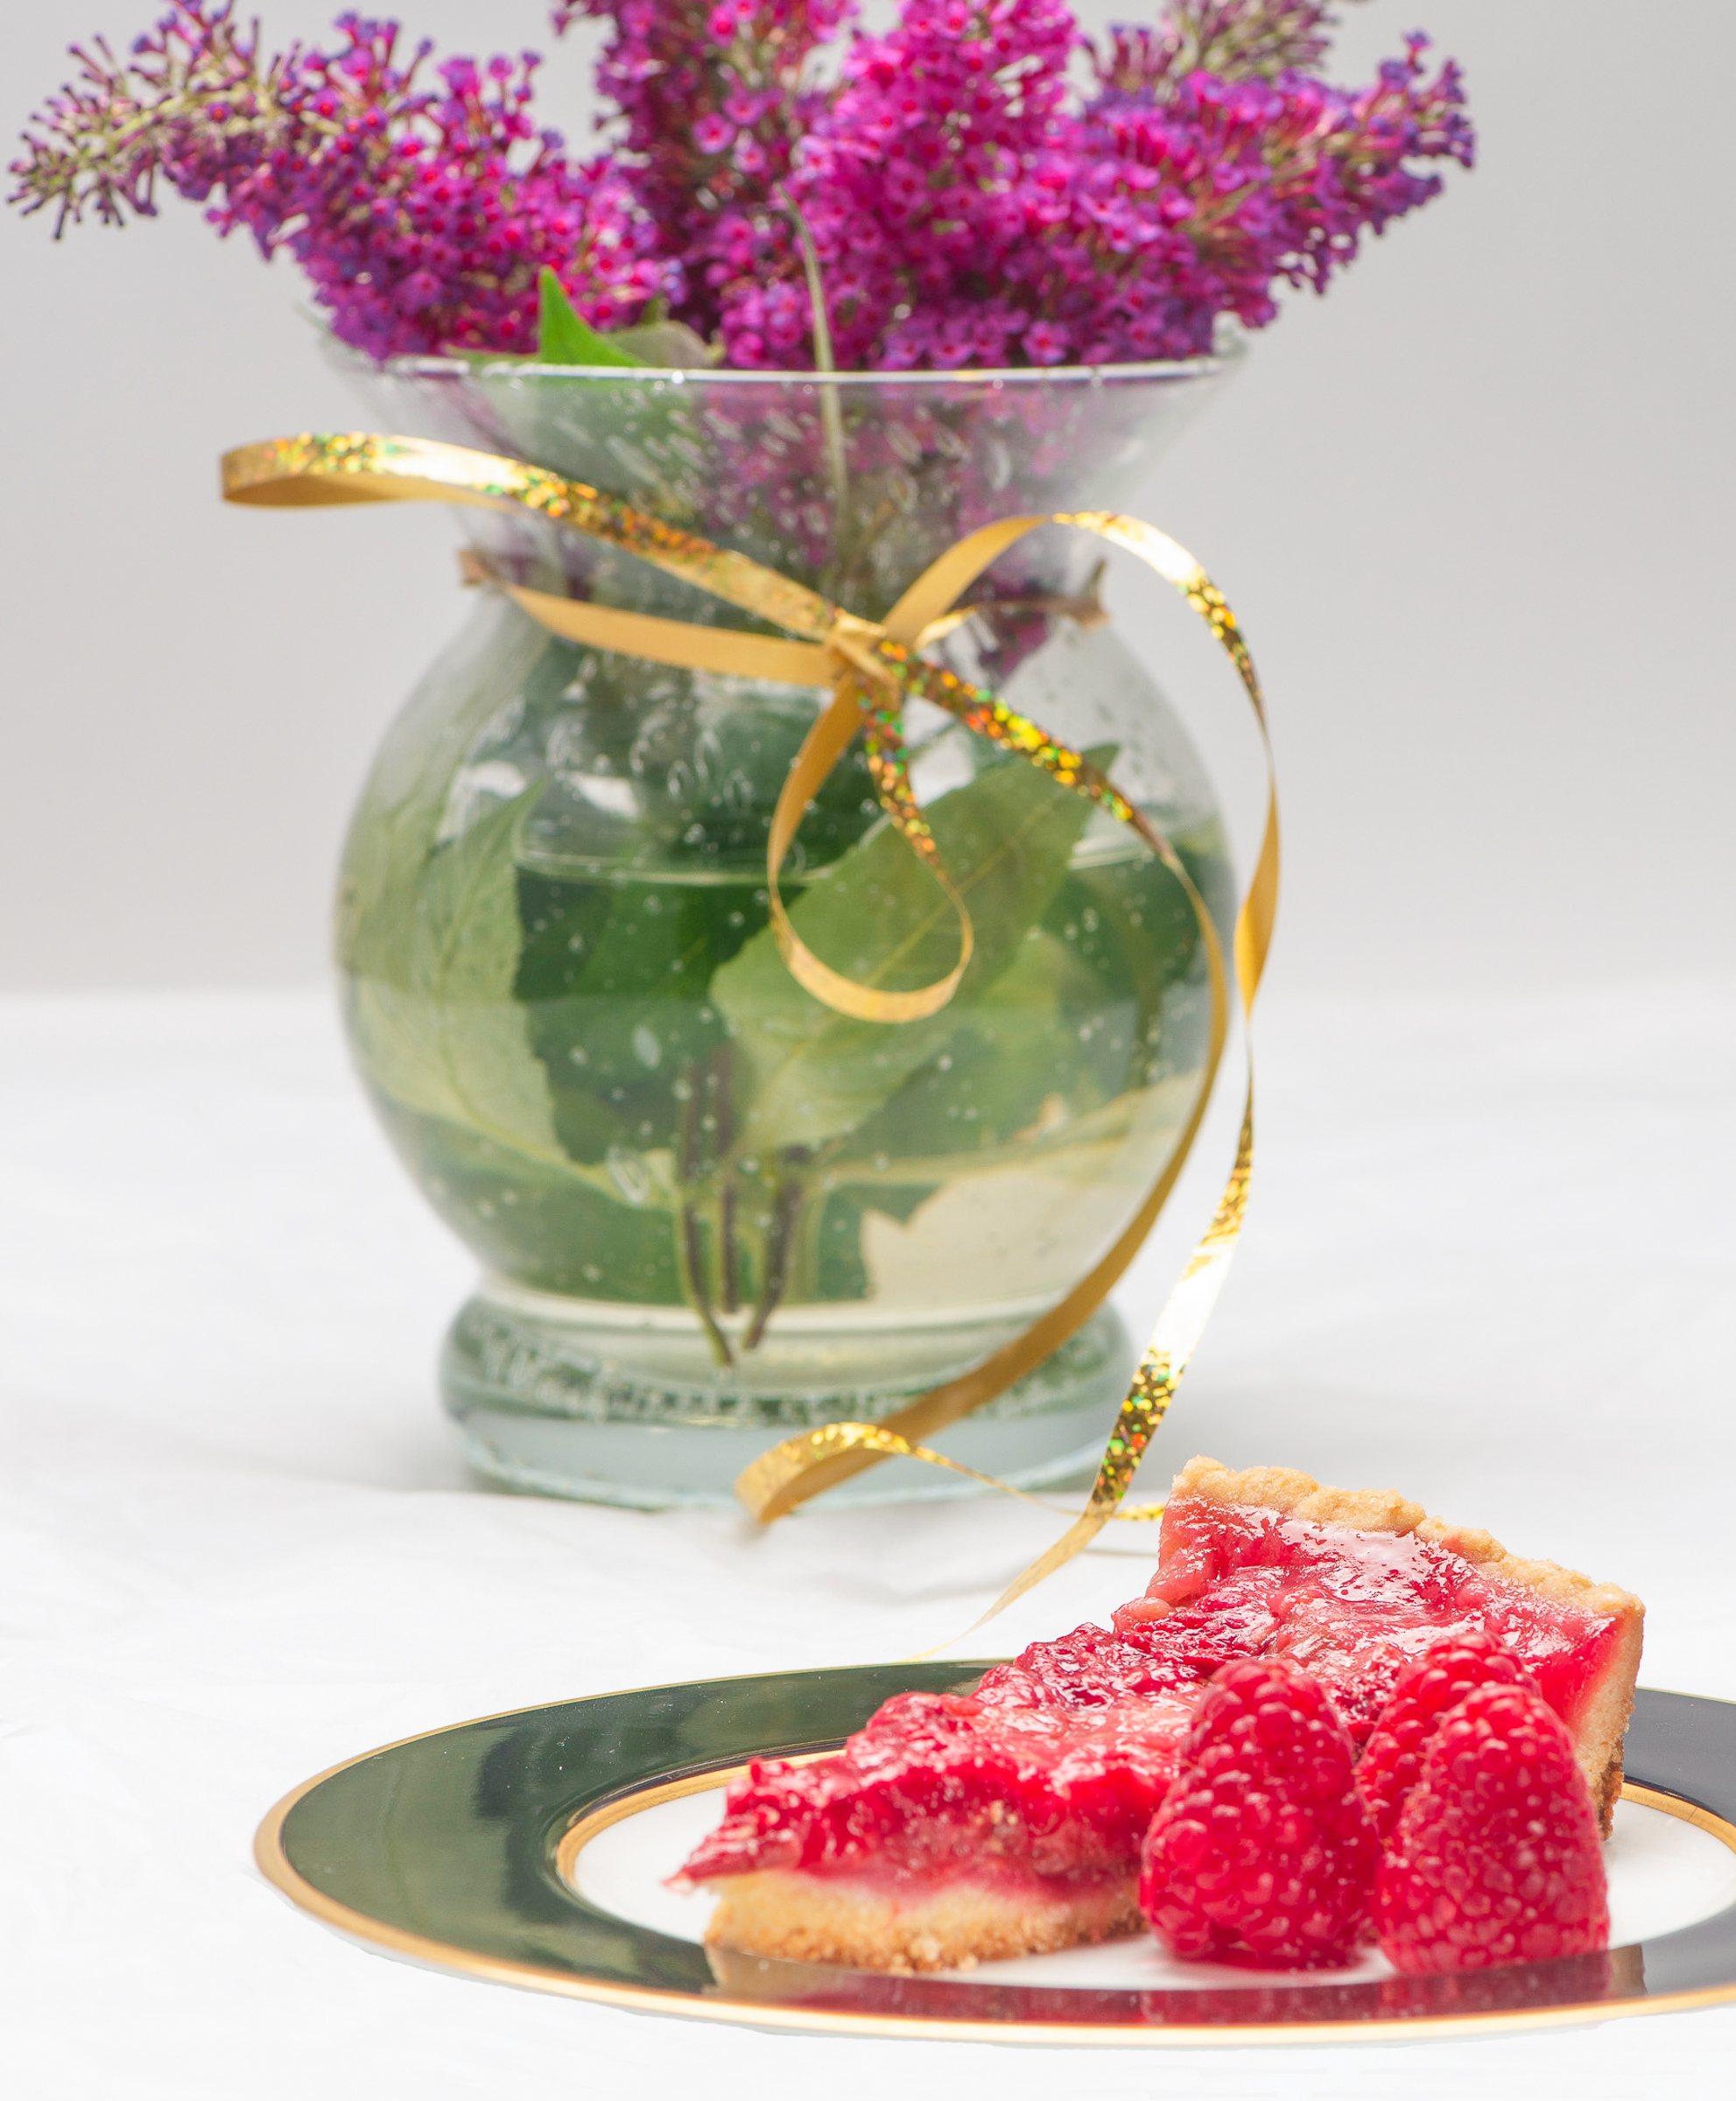 Beebop-a-Reebop: Raspberry and Rhubarb Pie